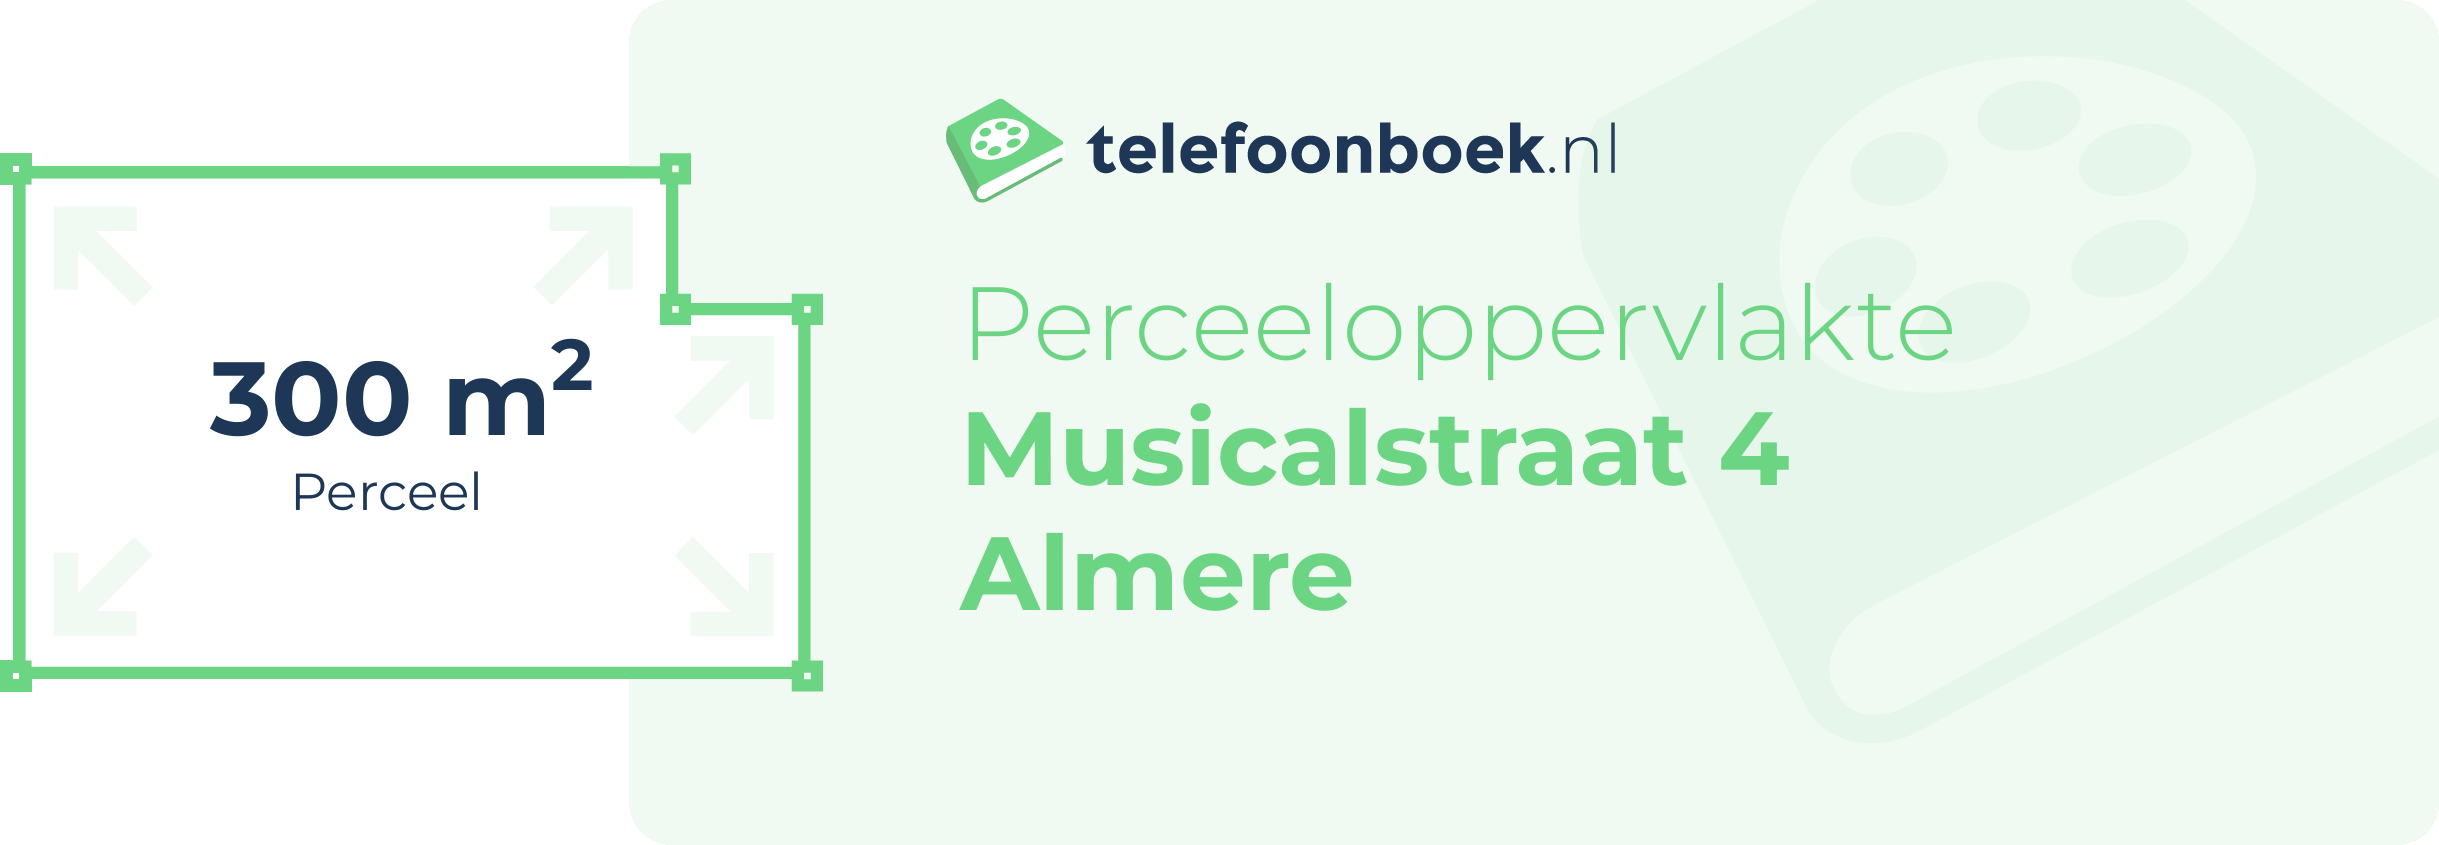 Perceeloppervlakte Musicalstraat 4 Almere